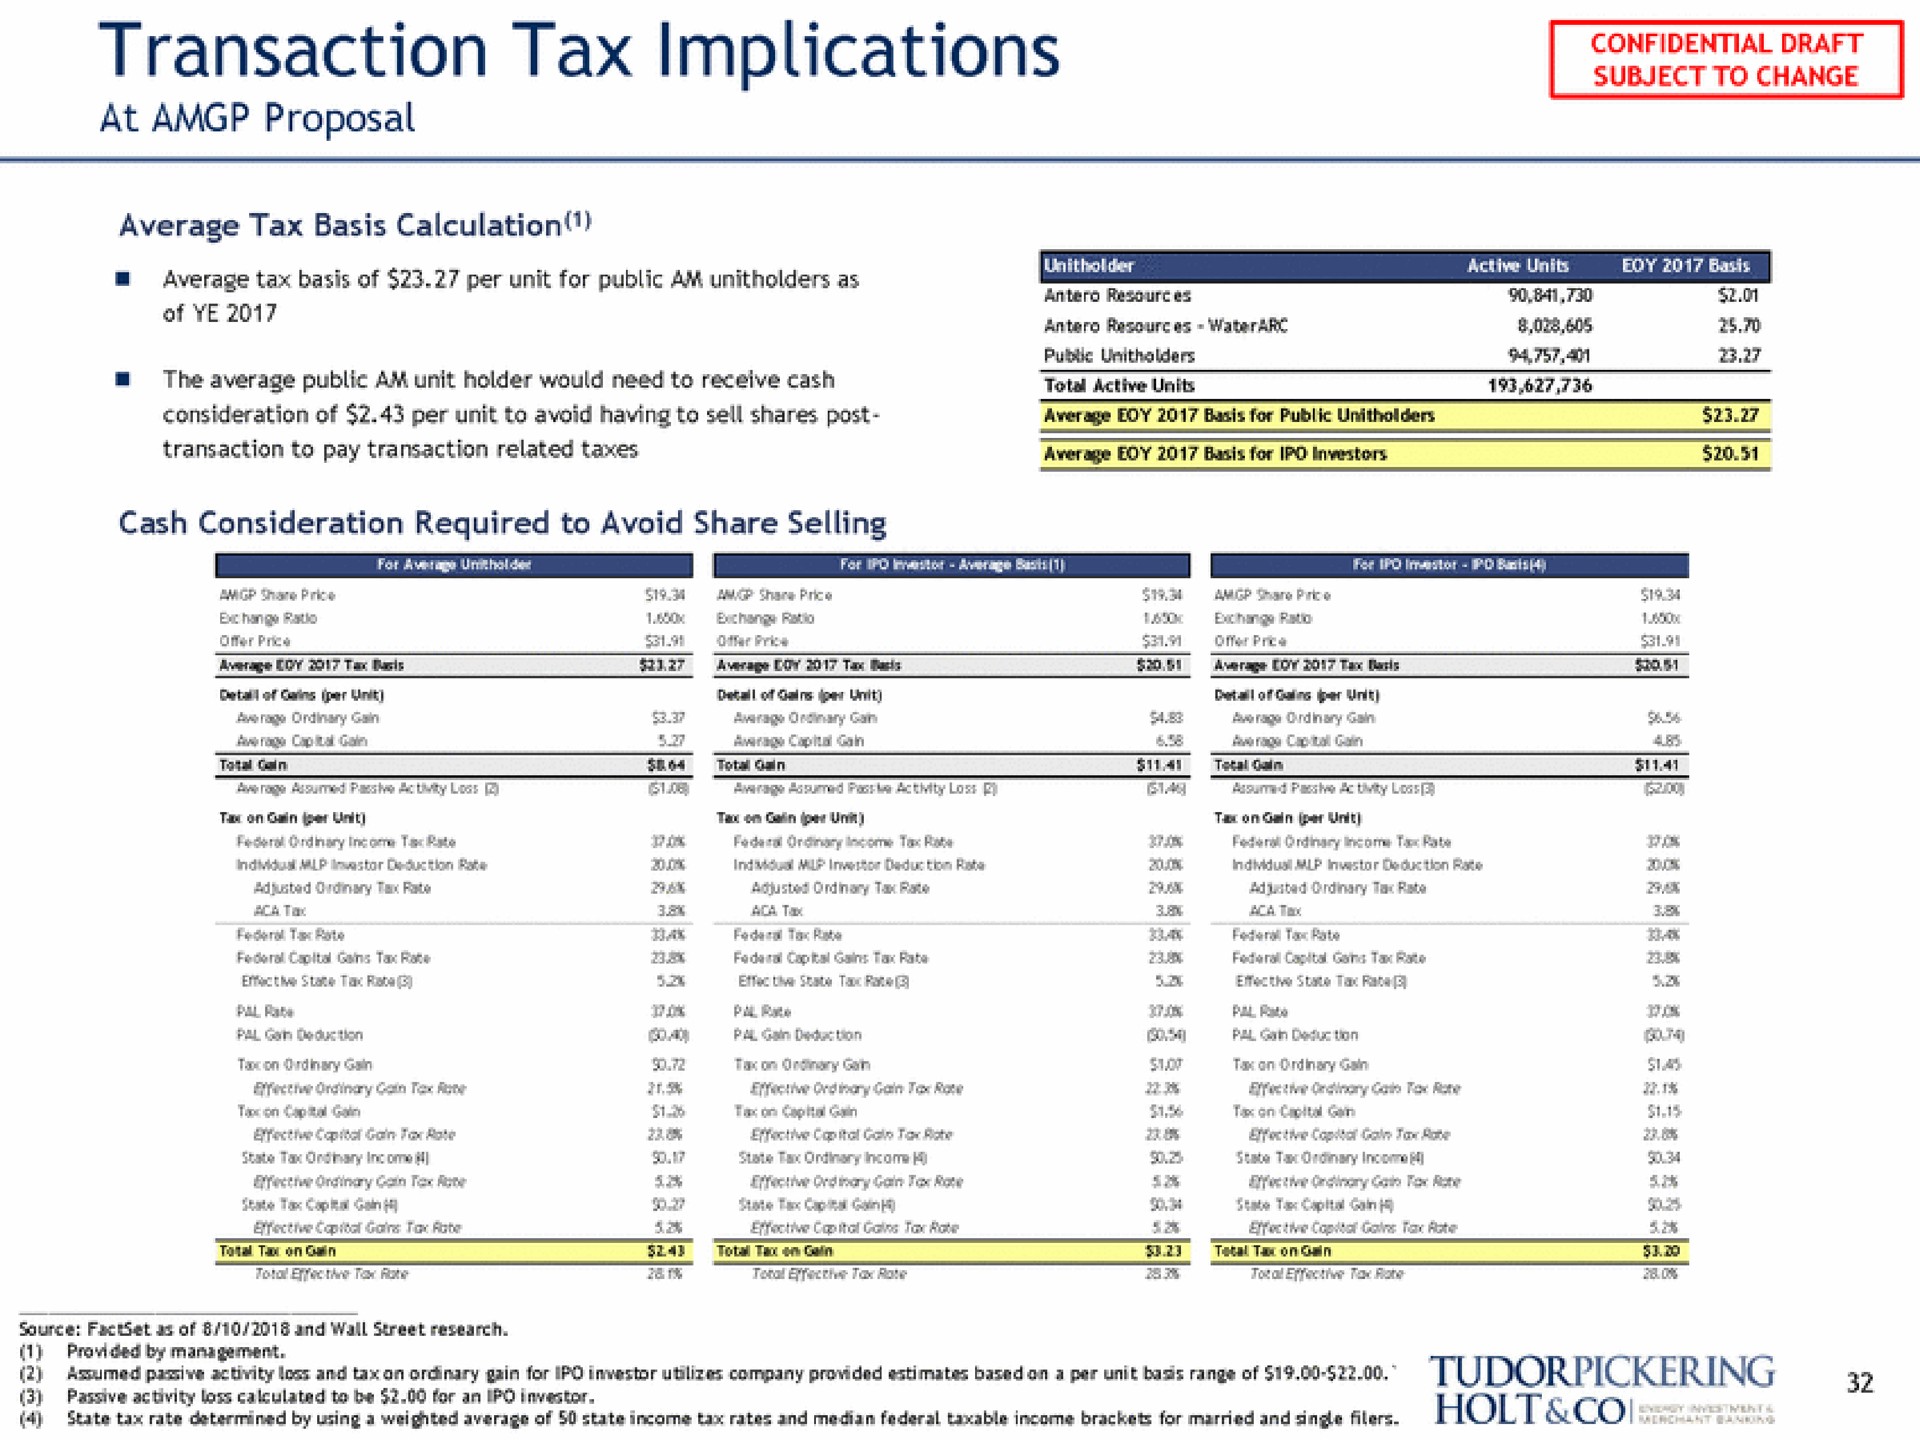 transaction tax implications at proposal | Tudor, Pickering, Holt & Co